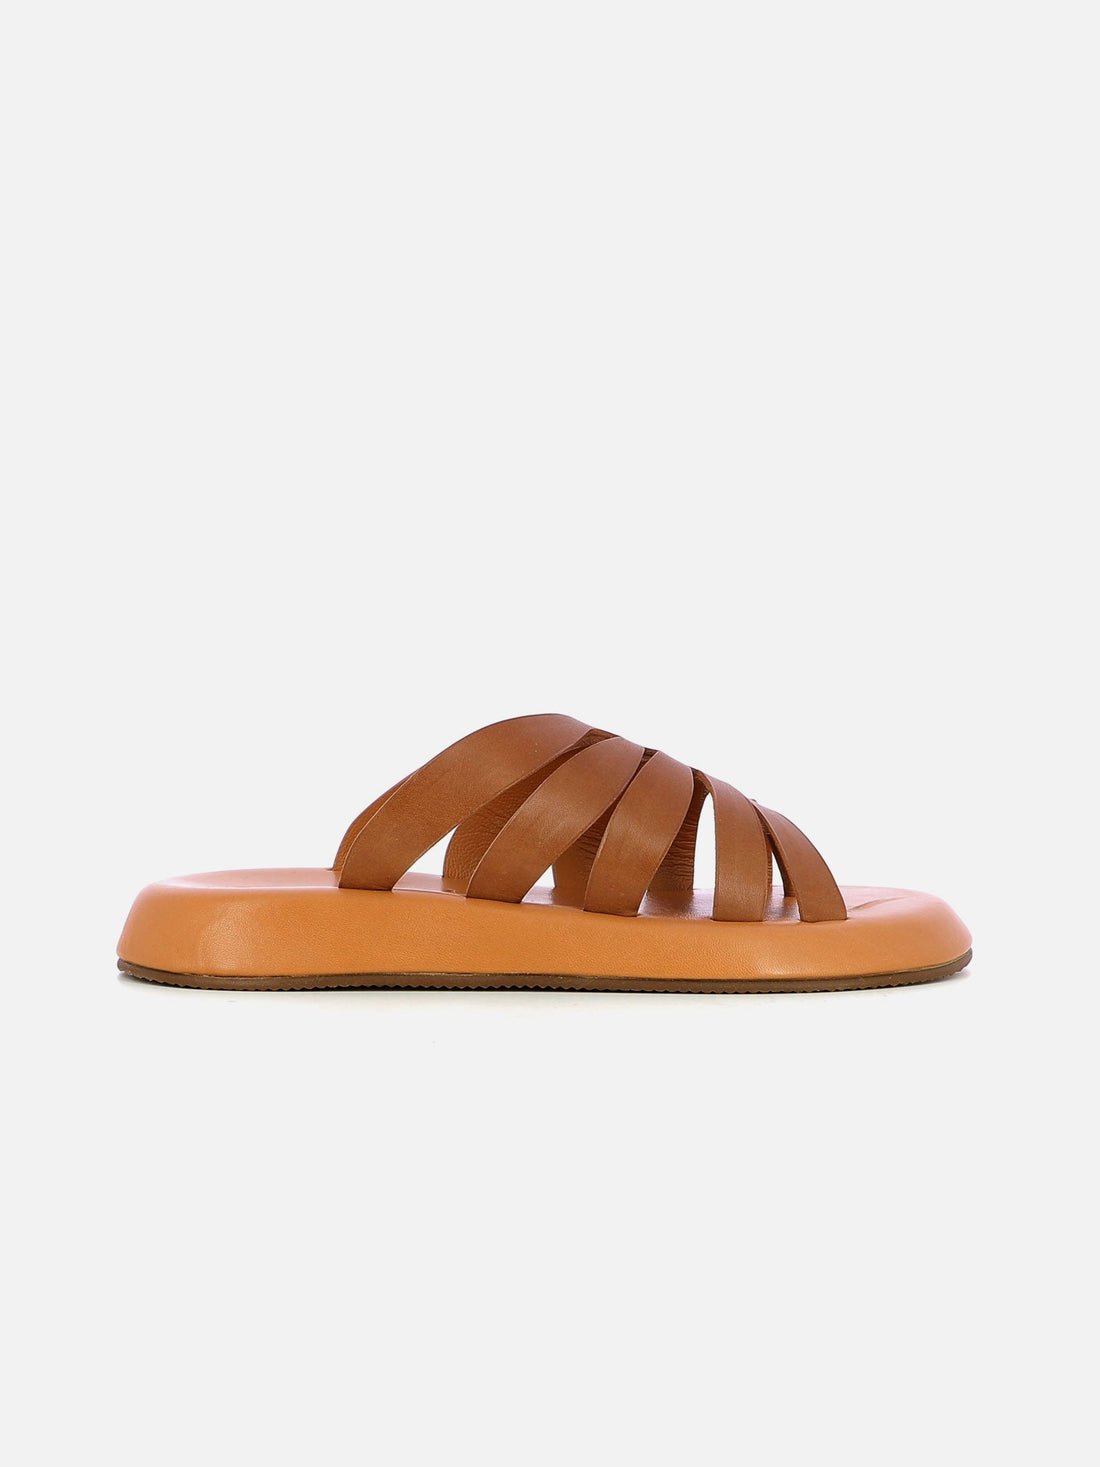 SANDALS - LAYEL sandals, vegetal calfskin brown - 3606063724753 - Clergerie Paris - Europe